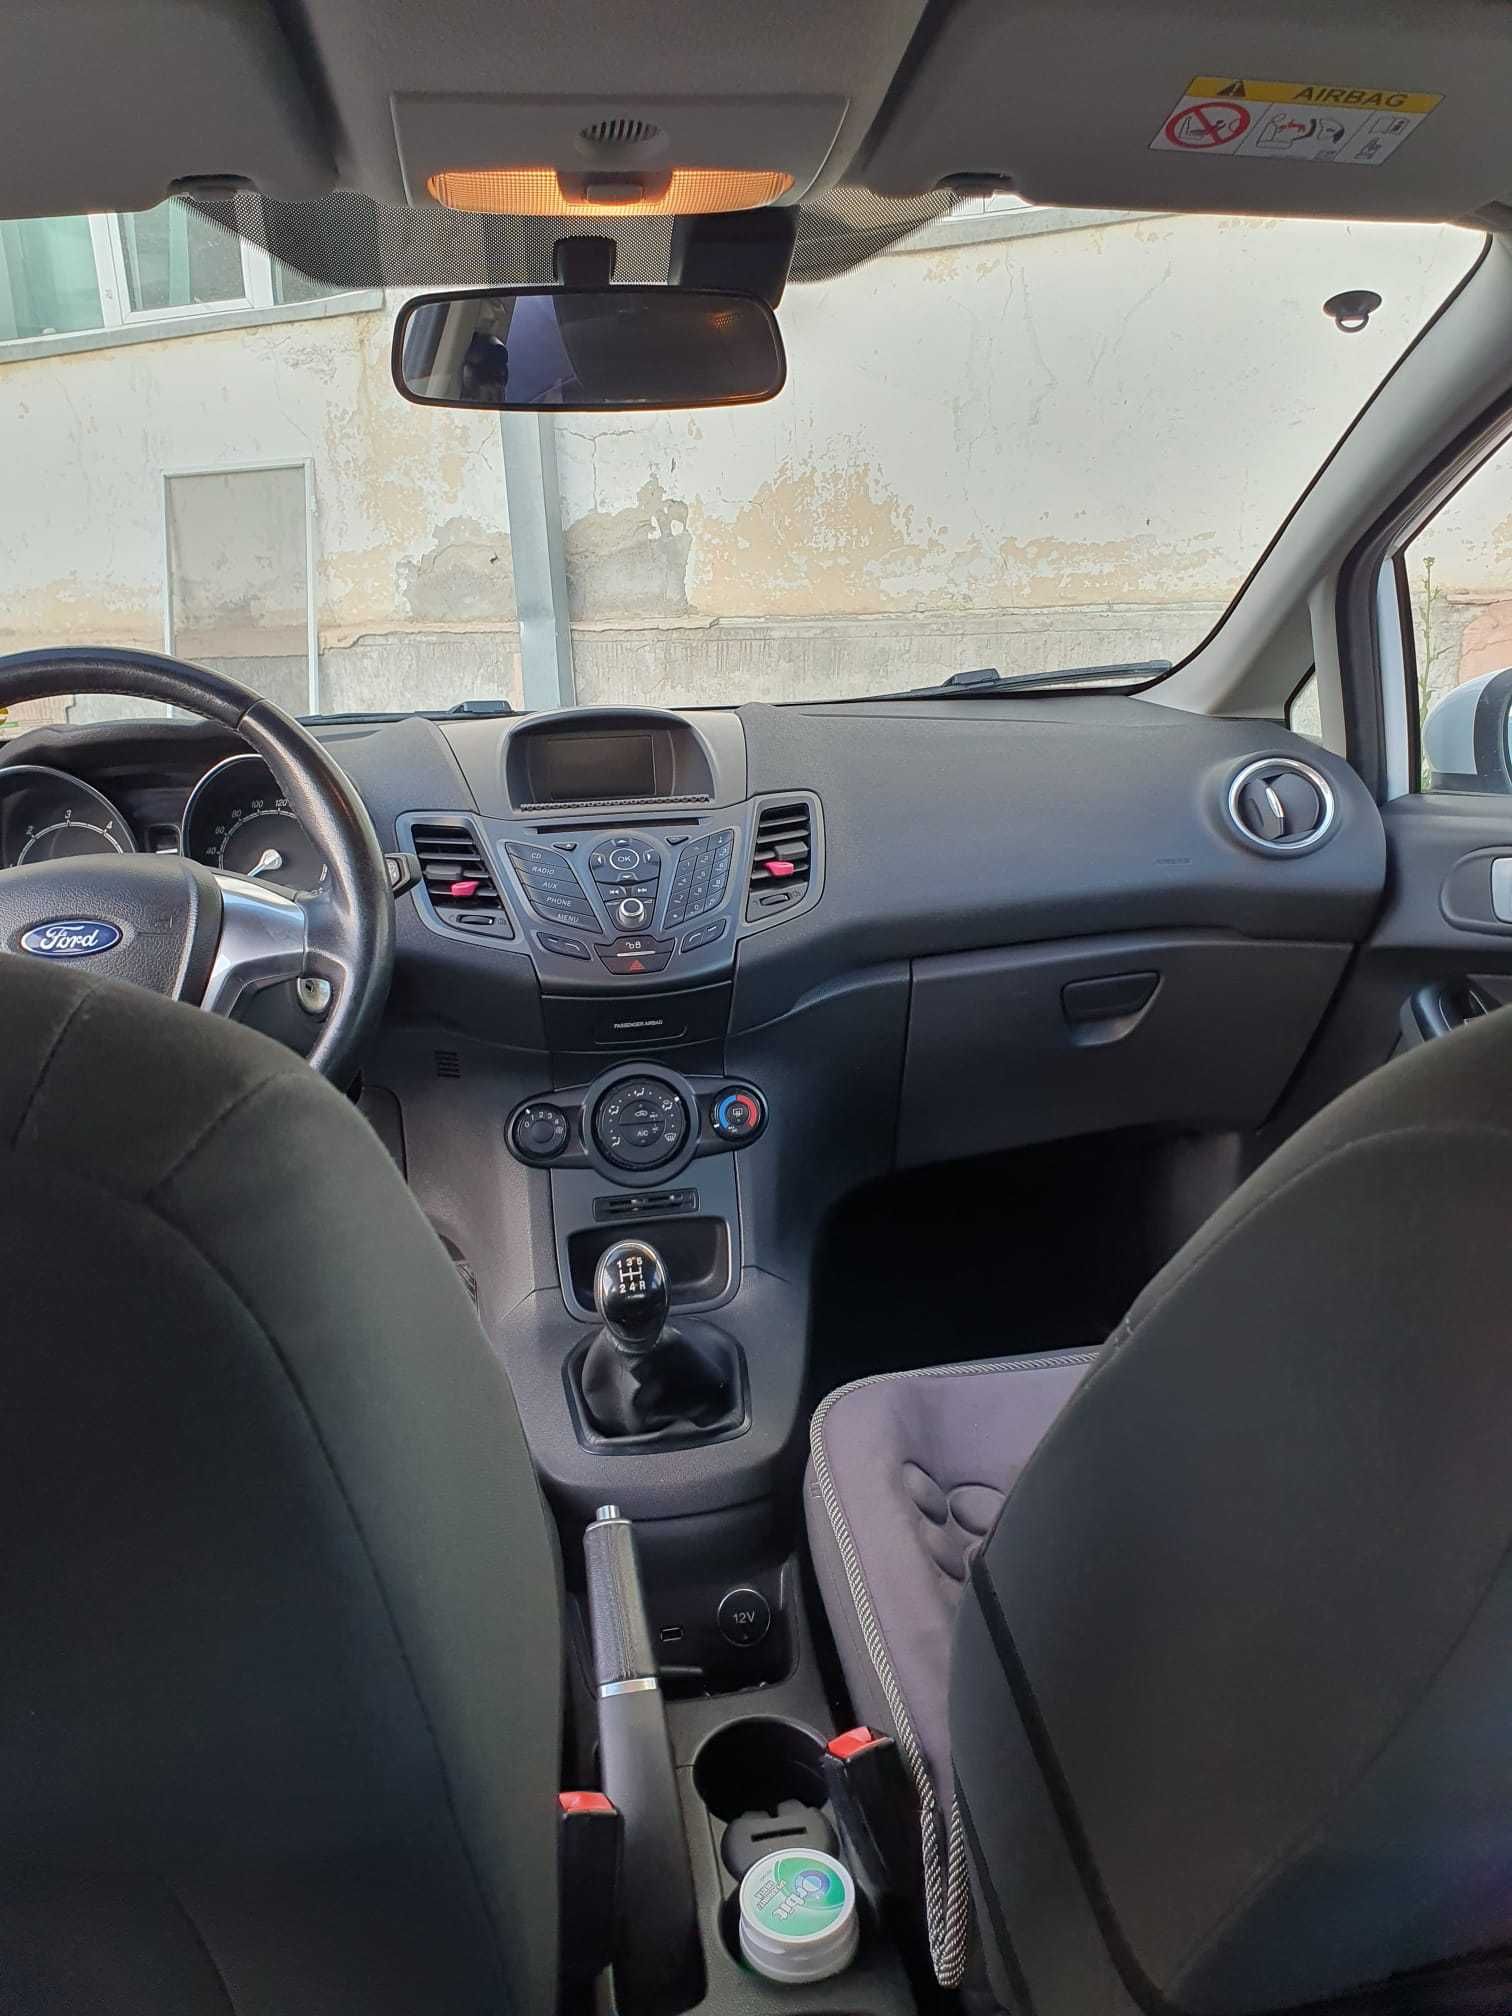 Ford Fiesta Mk6 2017 Euro6